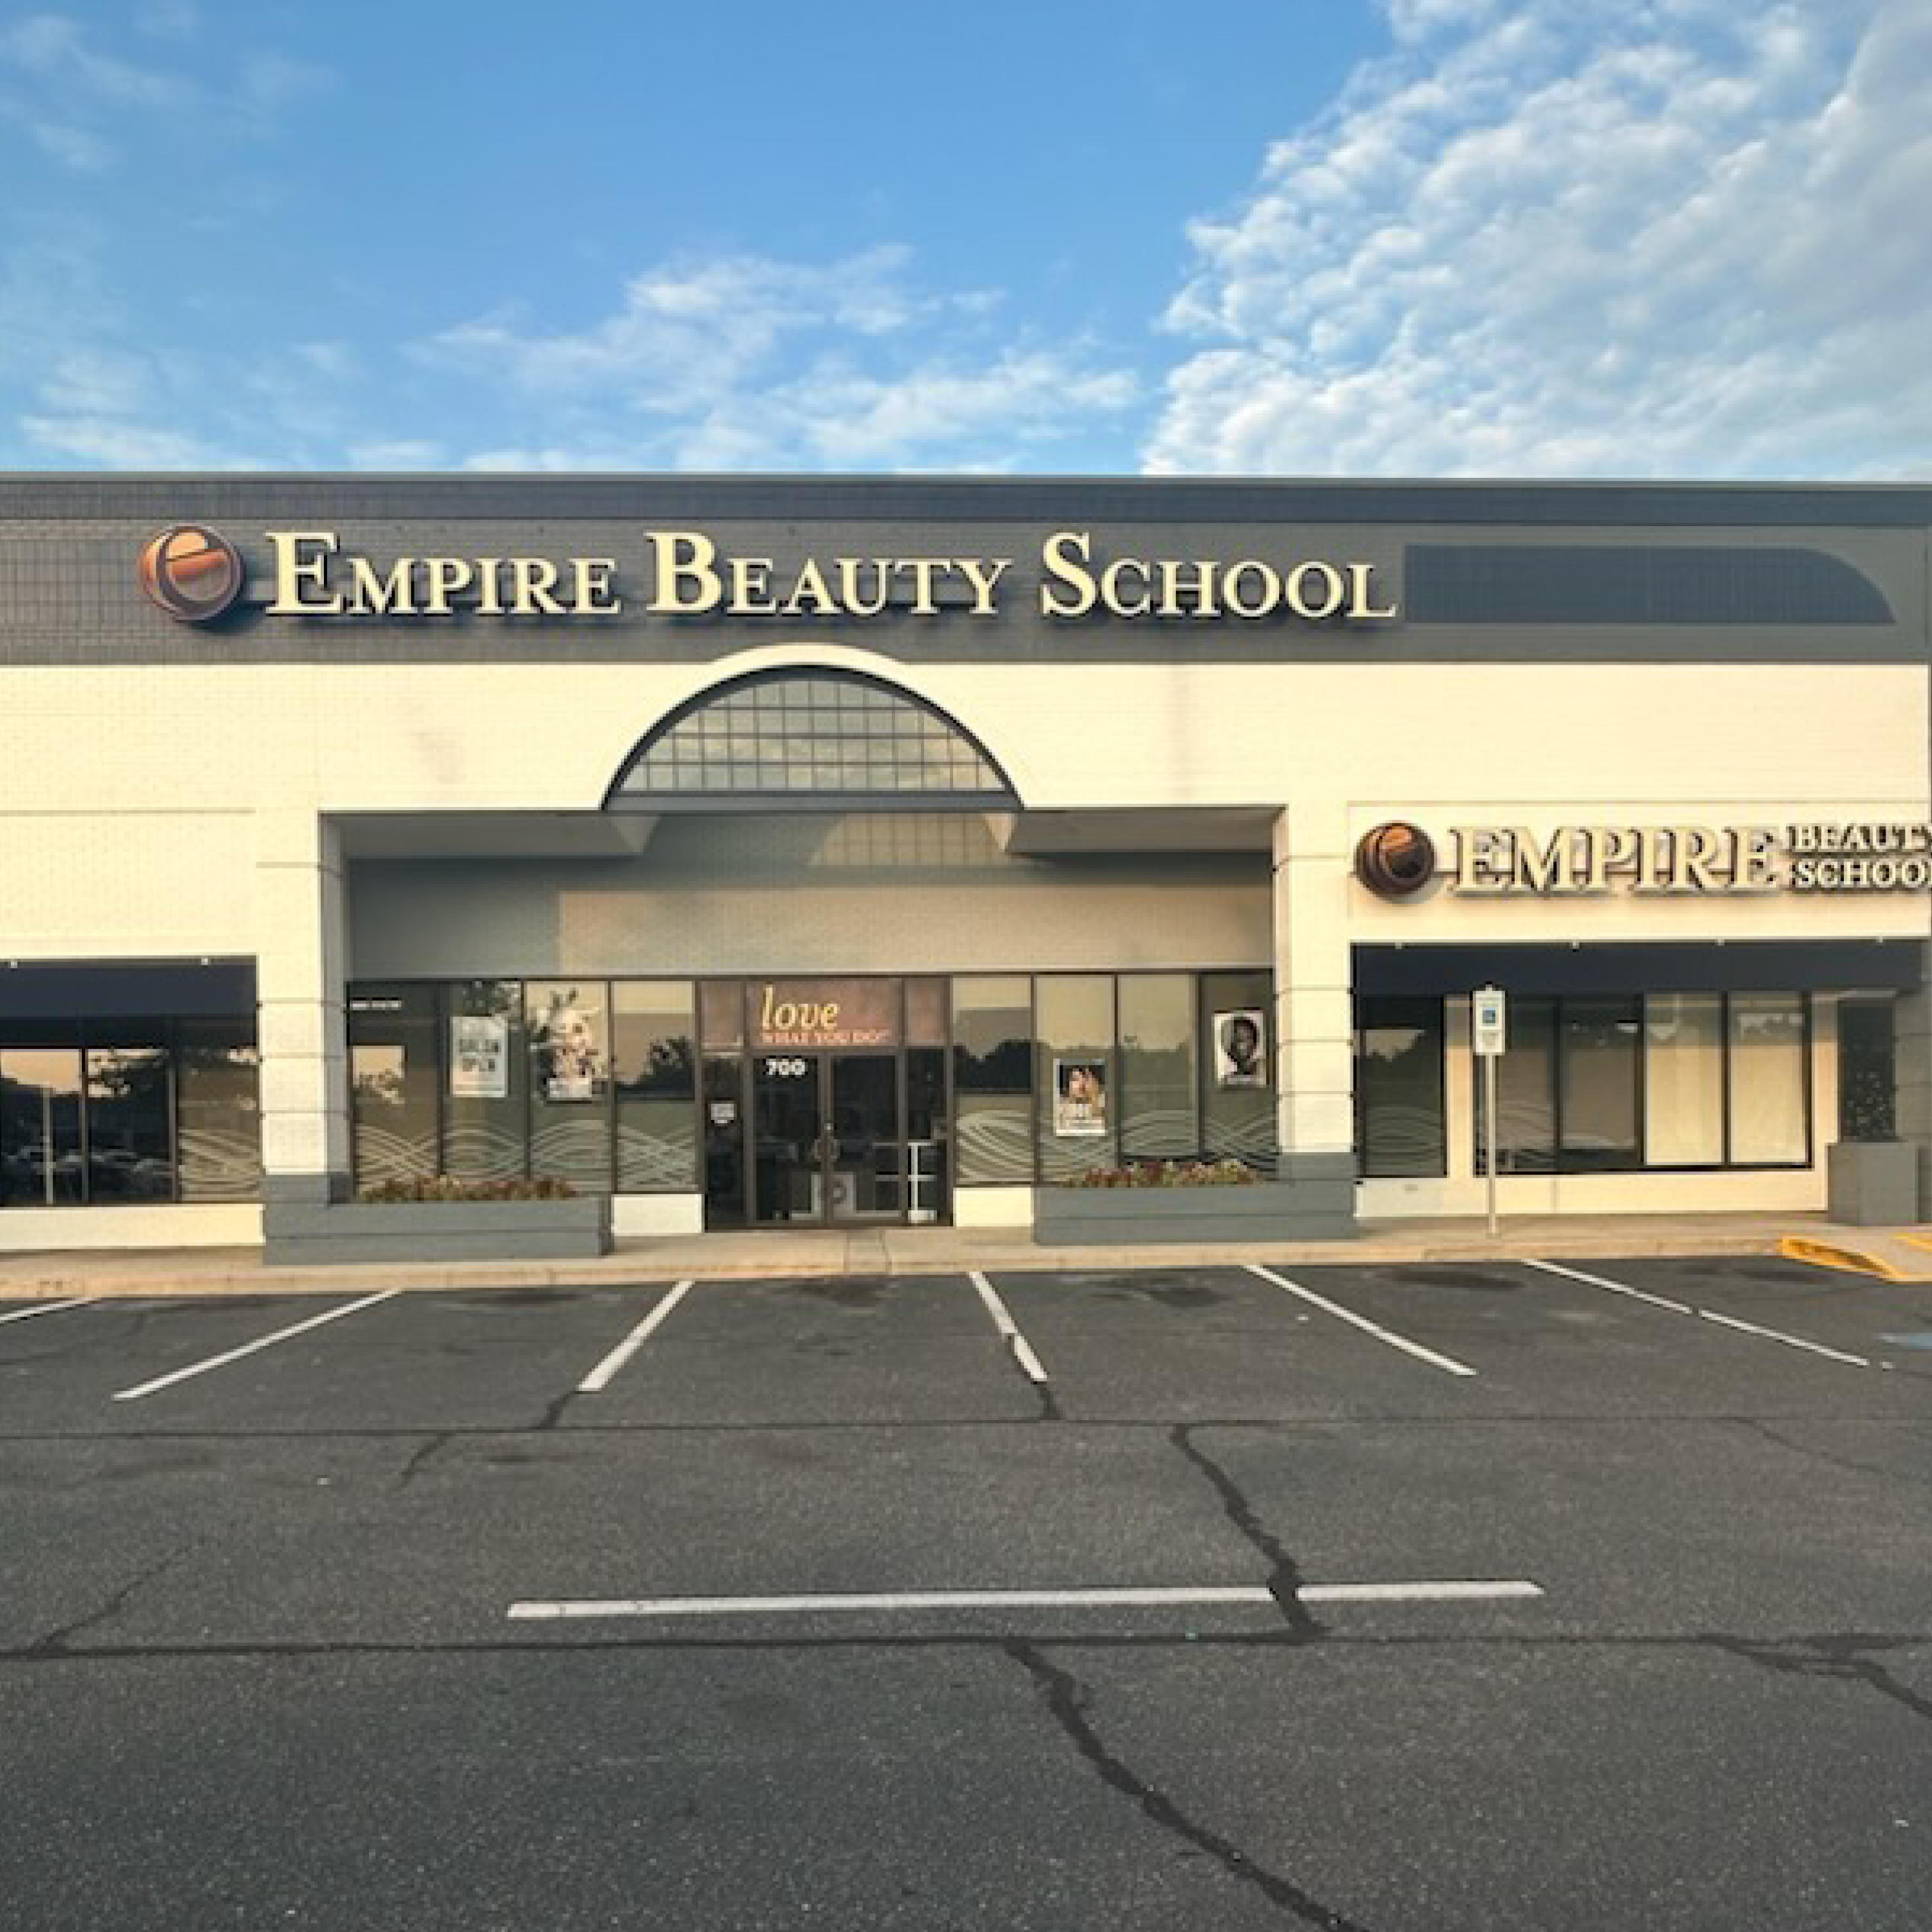 Empire Beauty School Charlotte (980)301-0132